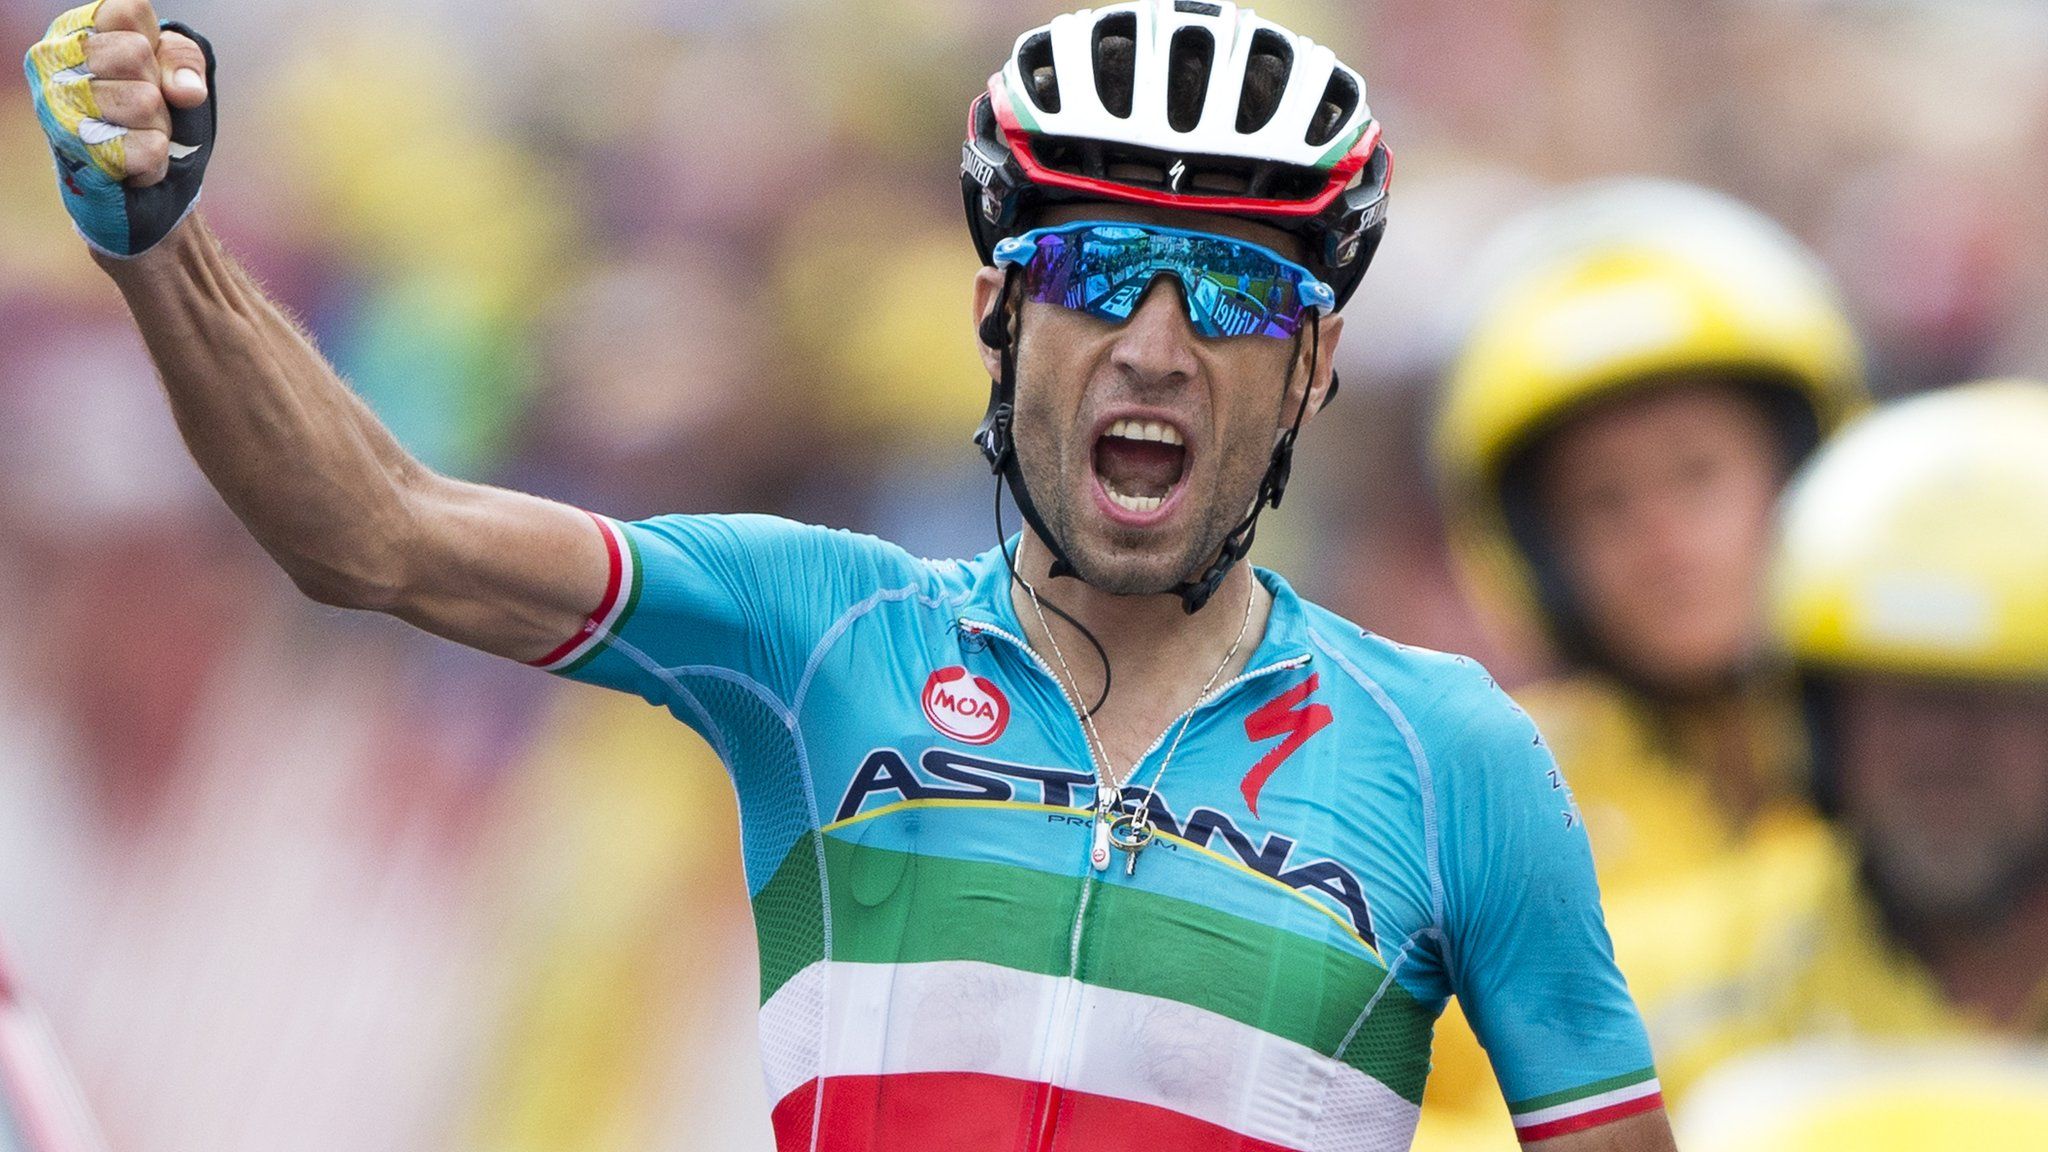 Tour de France: Chris Froome's lead cut by Nairo Quintana - BBC Sport